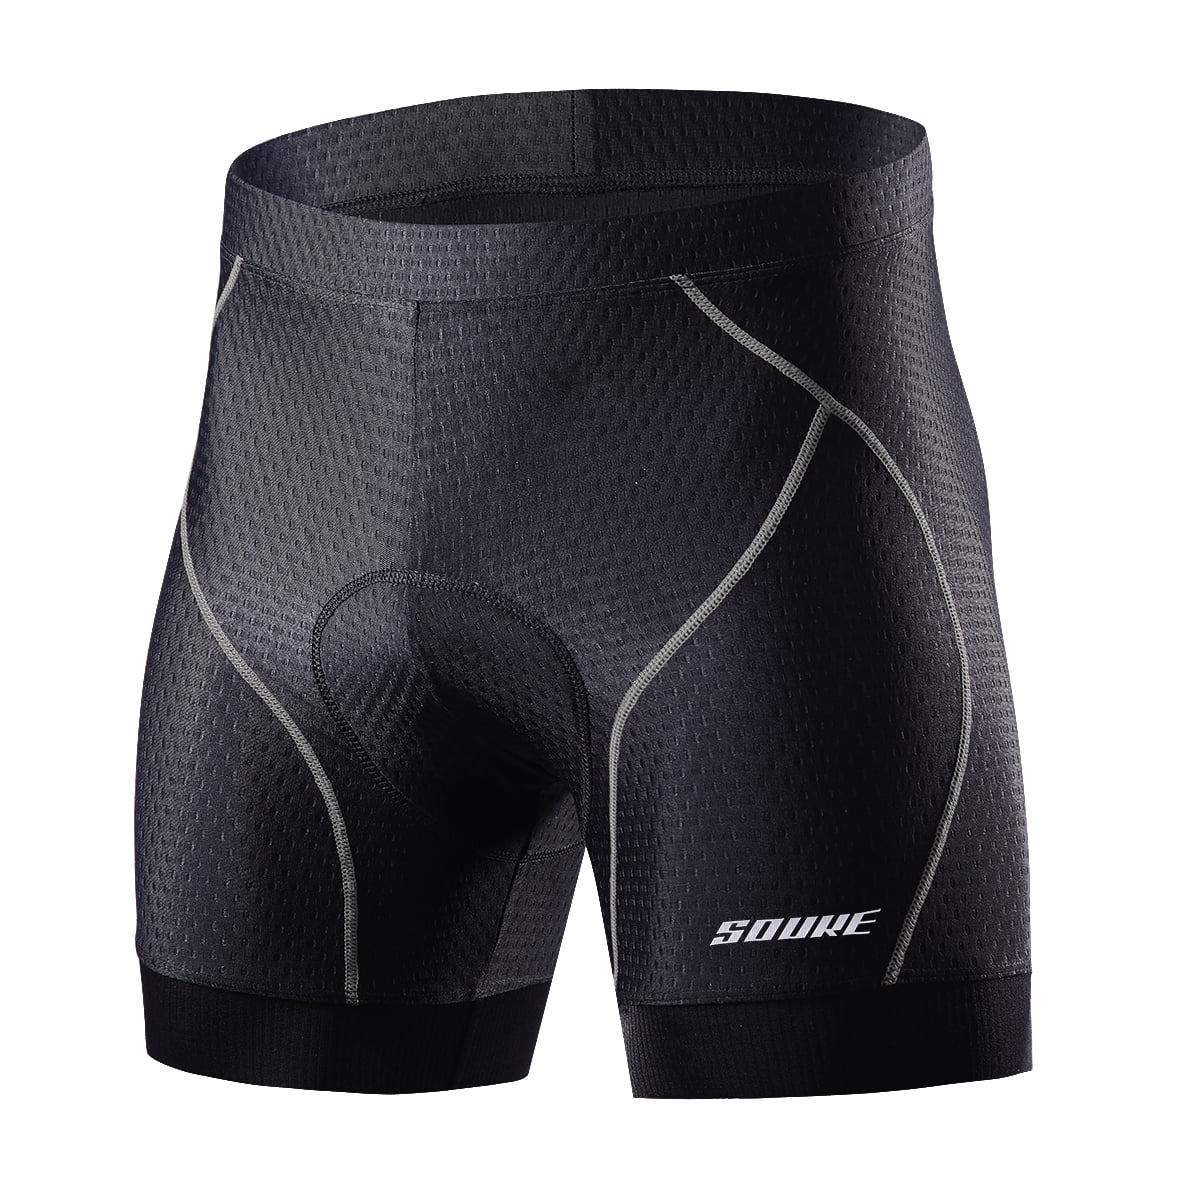 Souke Men's Cycling Underwear Shorts Pants 4D Padded Bike Bicycle MTB Liner 